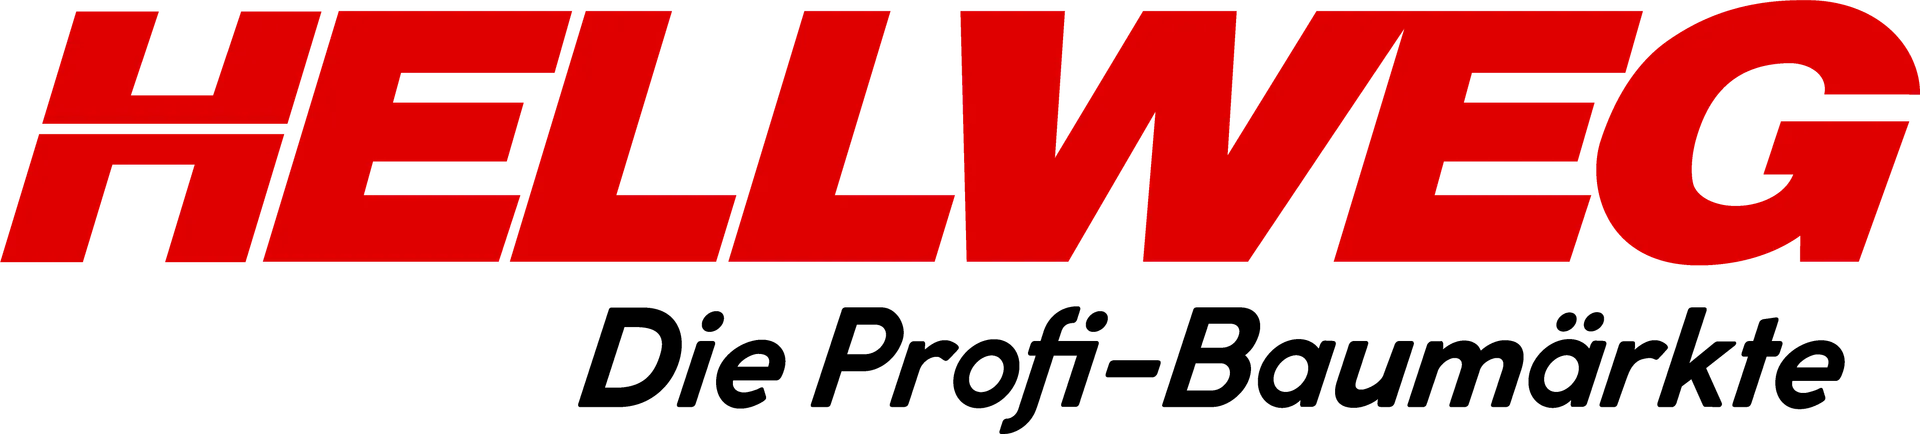 HELLWEG logo die aktuell Flugblatt